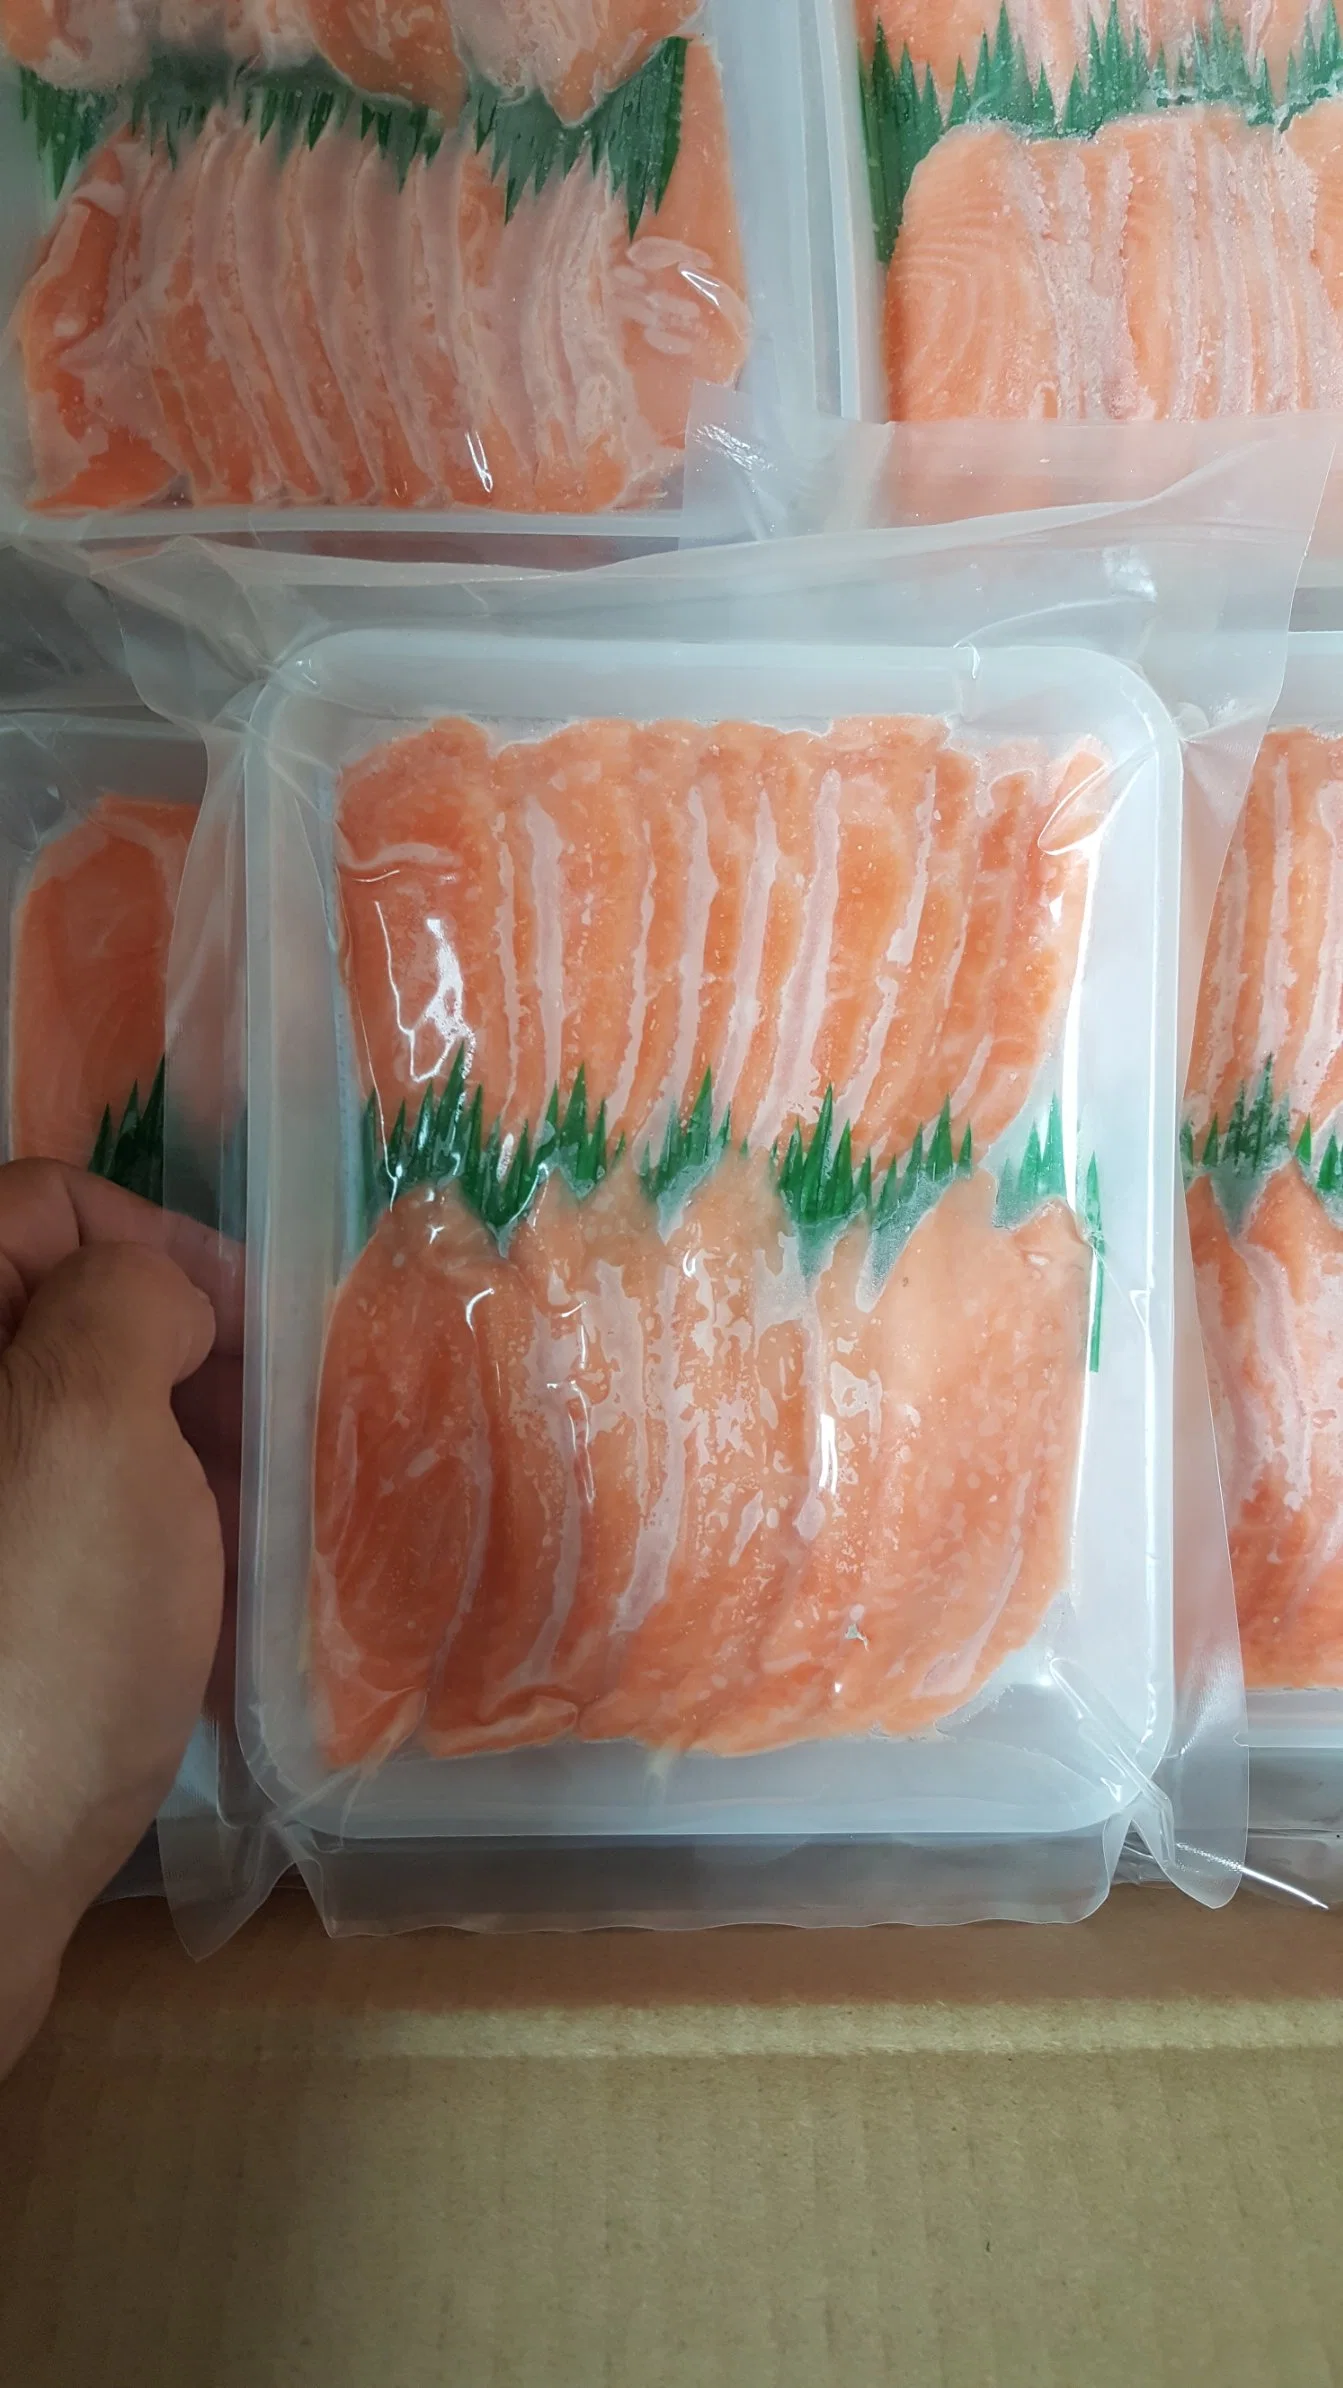 Sushi Salmon Slice, Halal Food. Frozen Salmon.